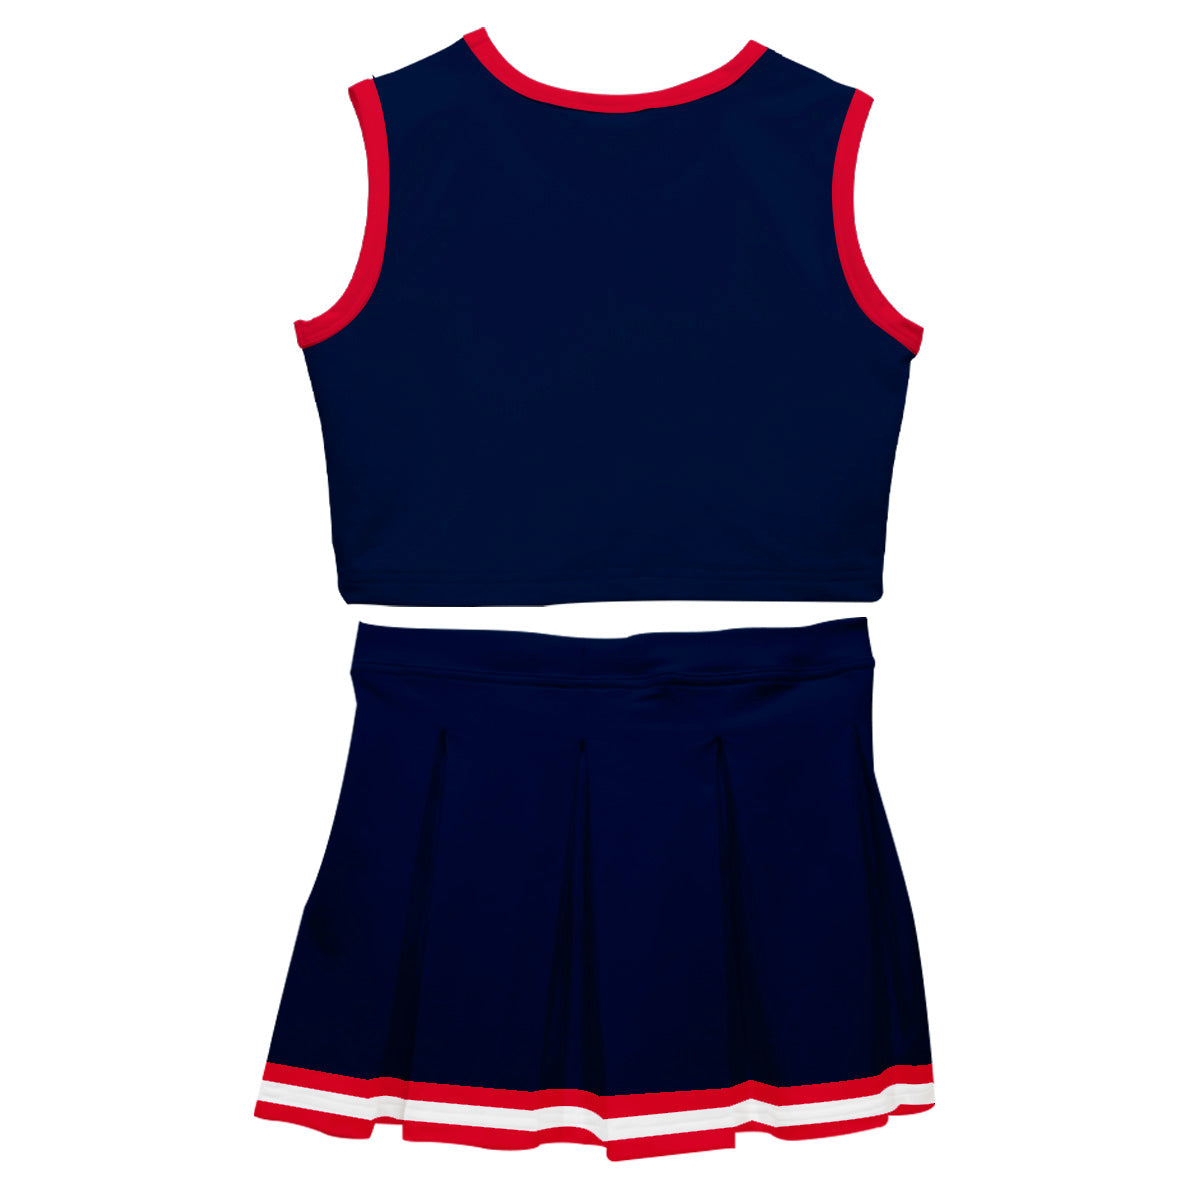 Red & Black Sleeveless Cheerleader Set - Wimziy&Co.